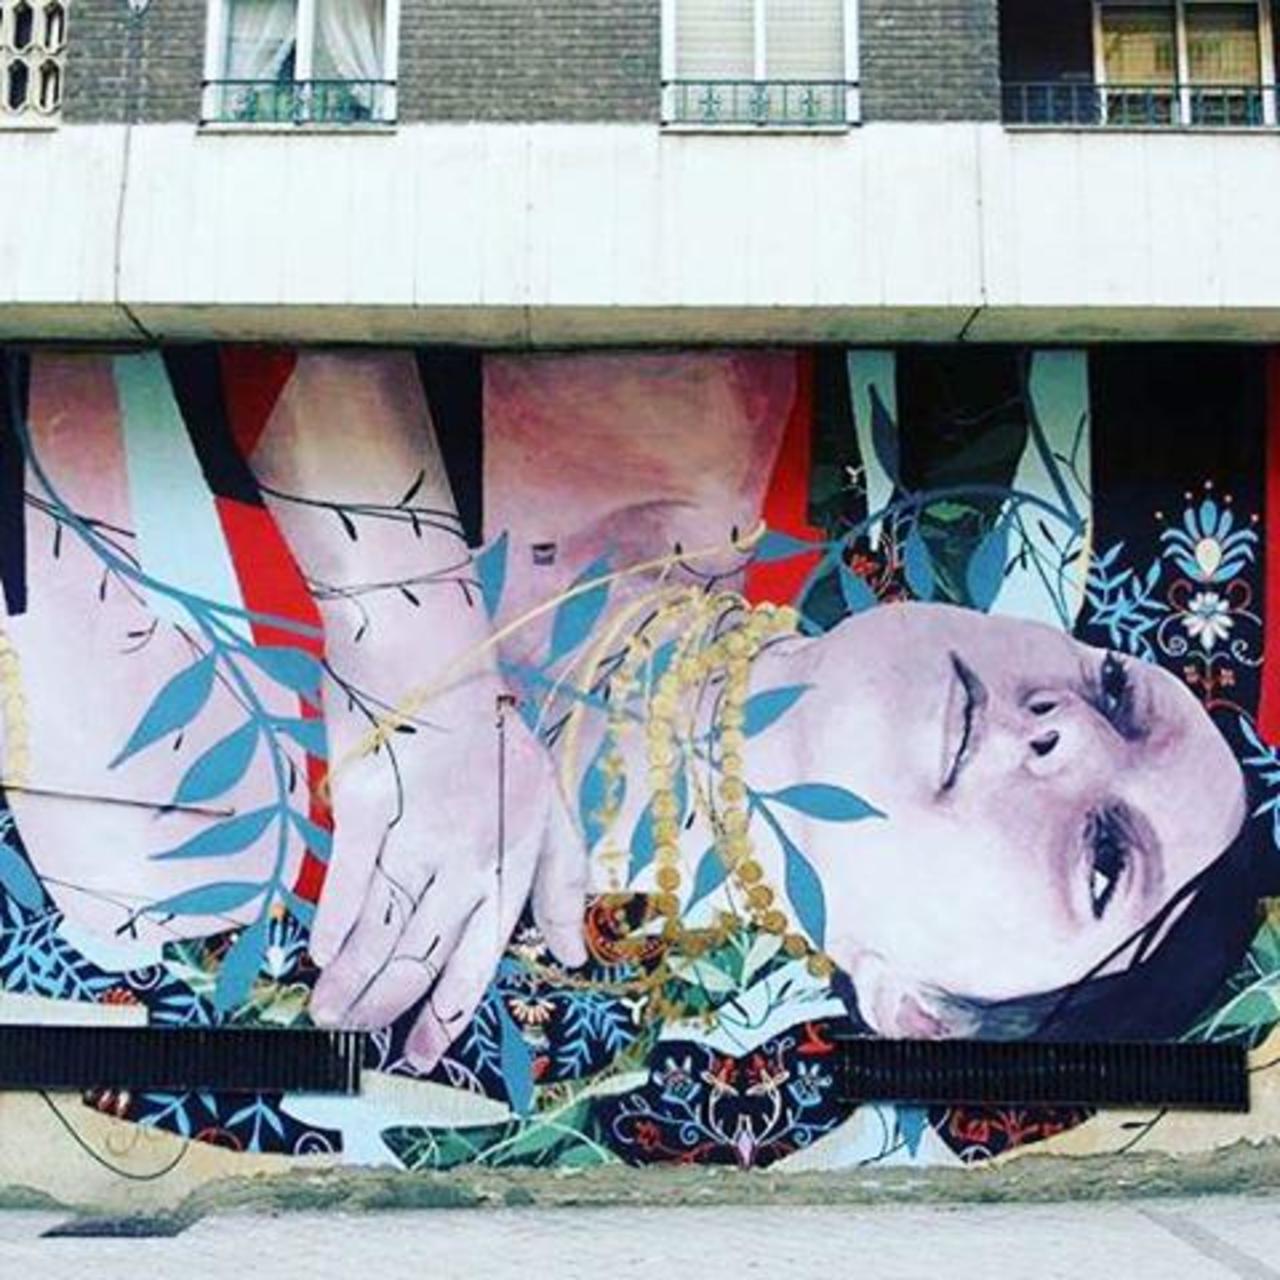 Bosoletti #graffiti #urbanart #urbanwalls #streetart... #LoveArt - - https://wp.me/p6qjkV-4E3 http://t.co/5giNNUY6vC